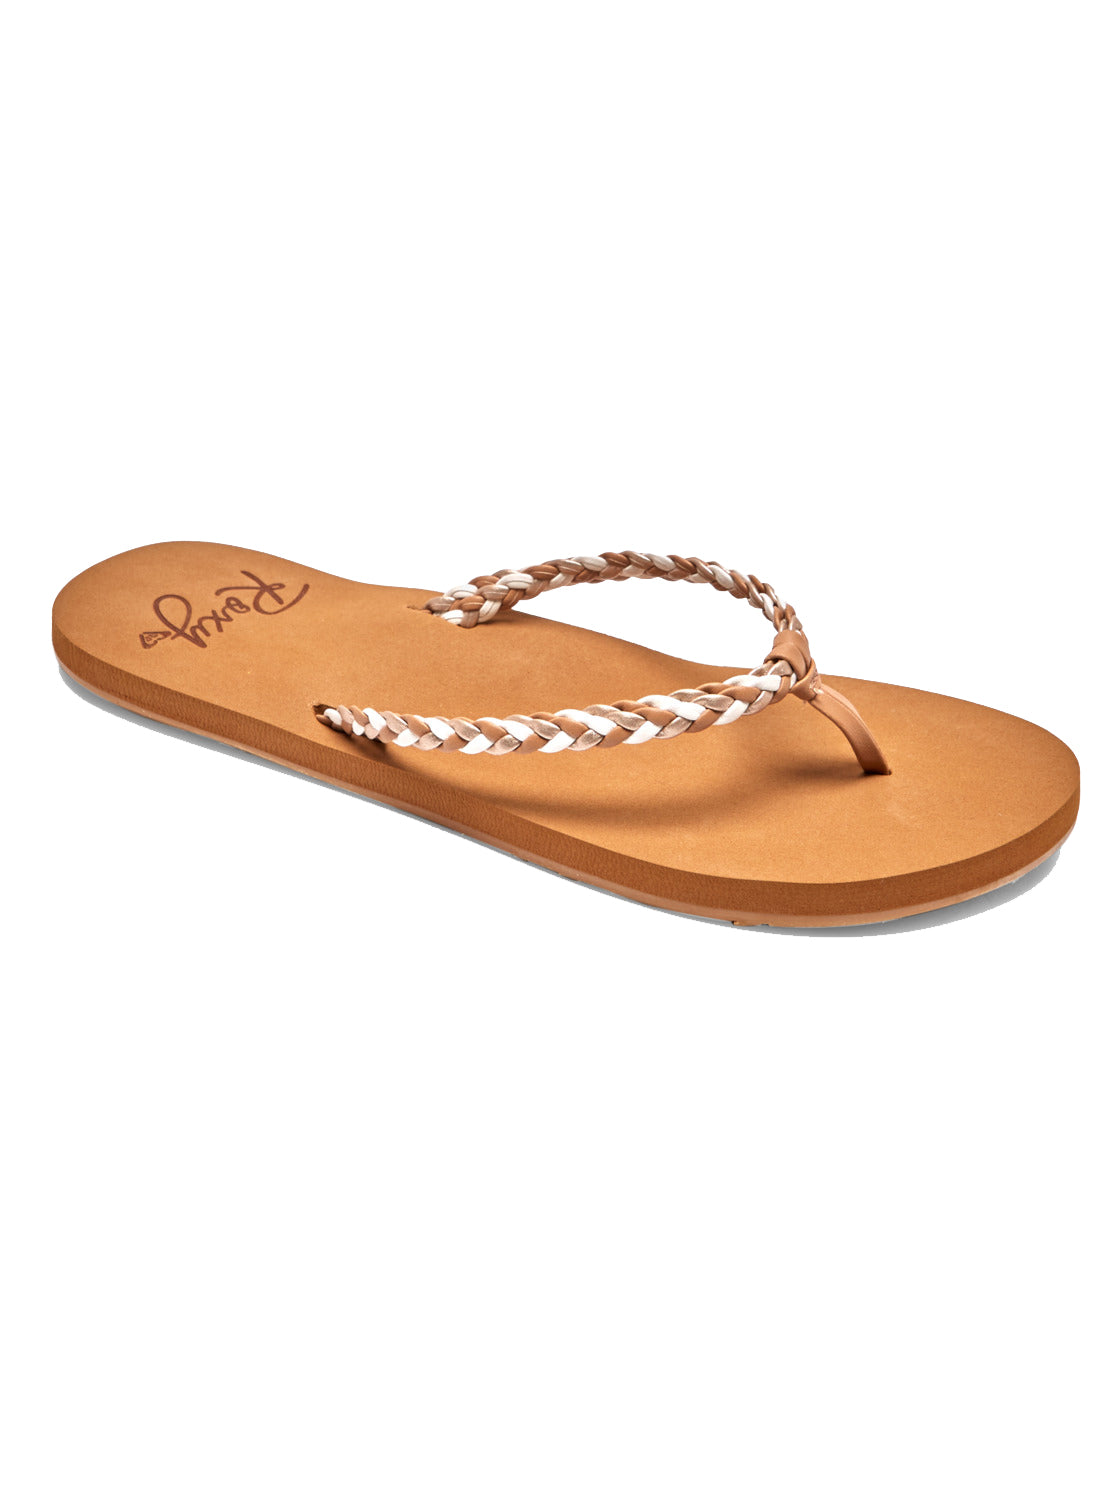 Roxy Costas Womens Sandal TG1-Tan-Gold 9